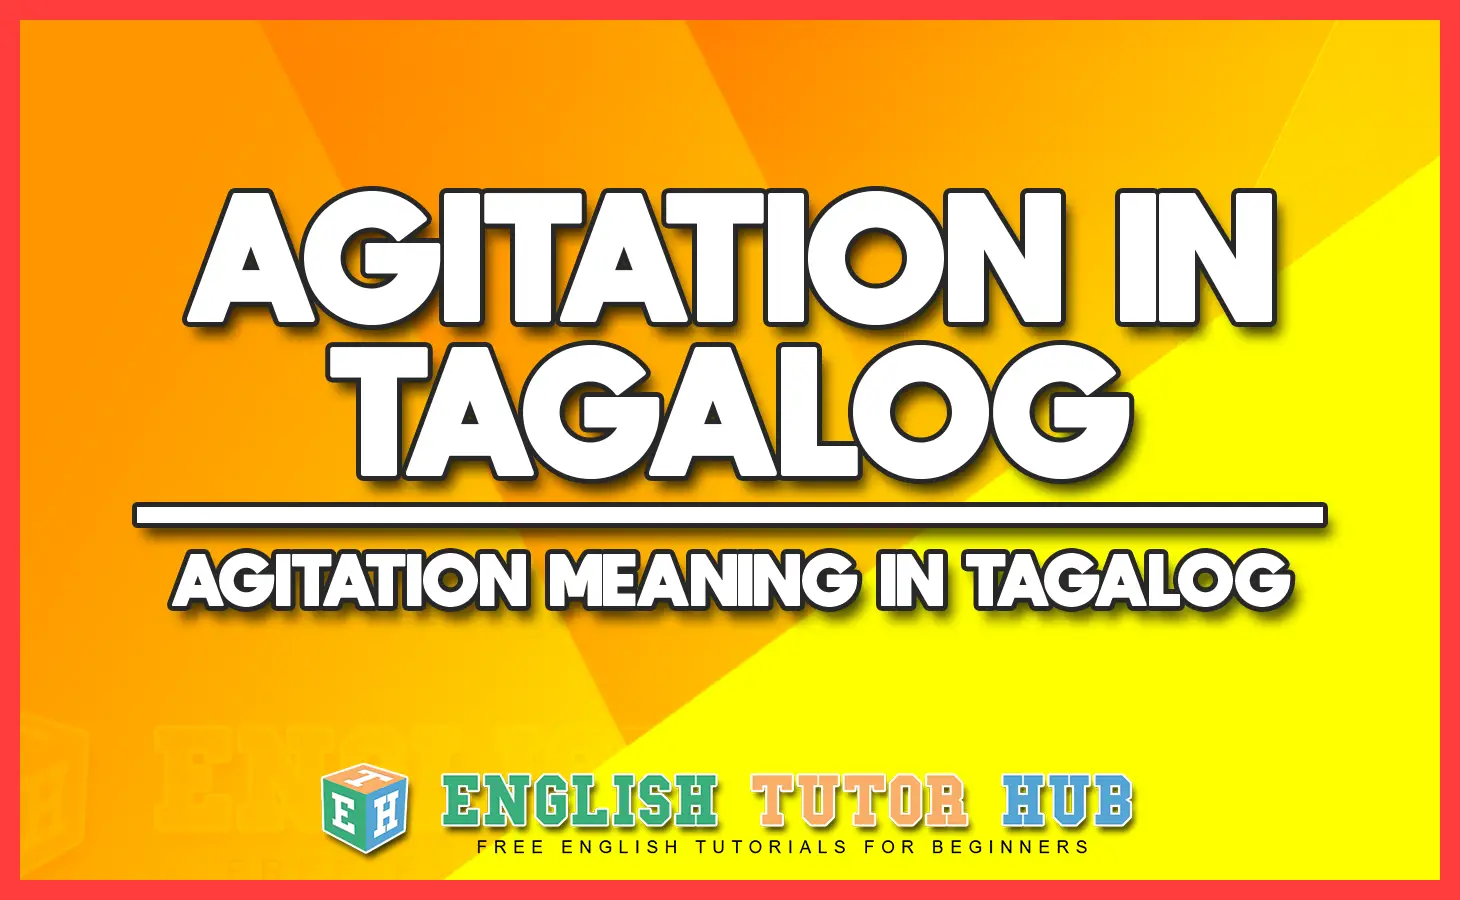 AGITATION IN TAGALOG - AGITATION MEANING IN TAGALOG